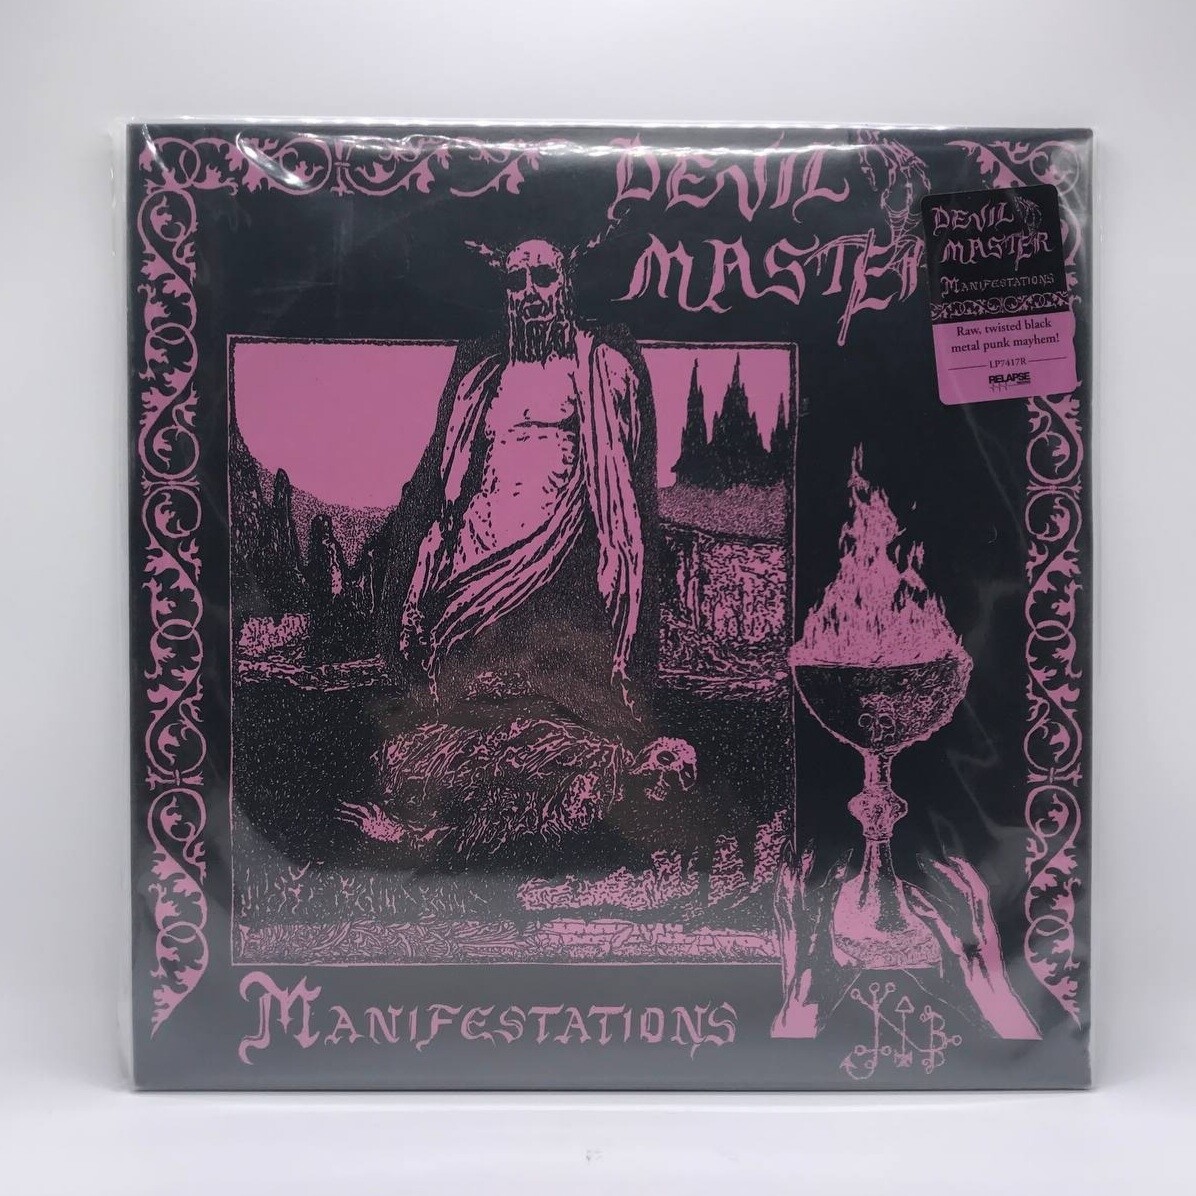 [USED] DEVIL MASTER -MANIFESTATIONS- LP